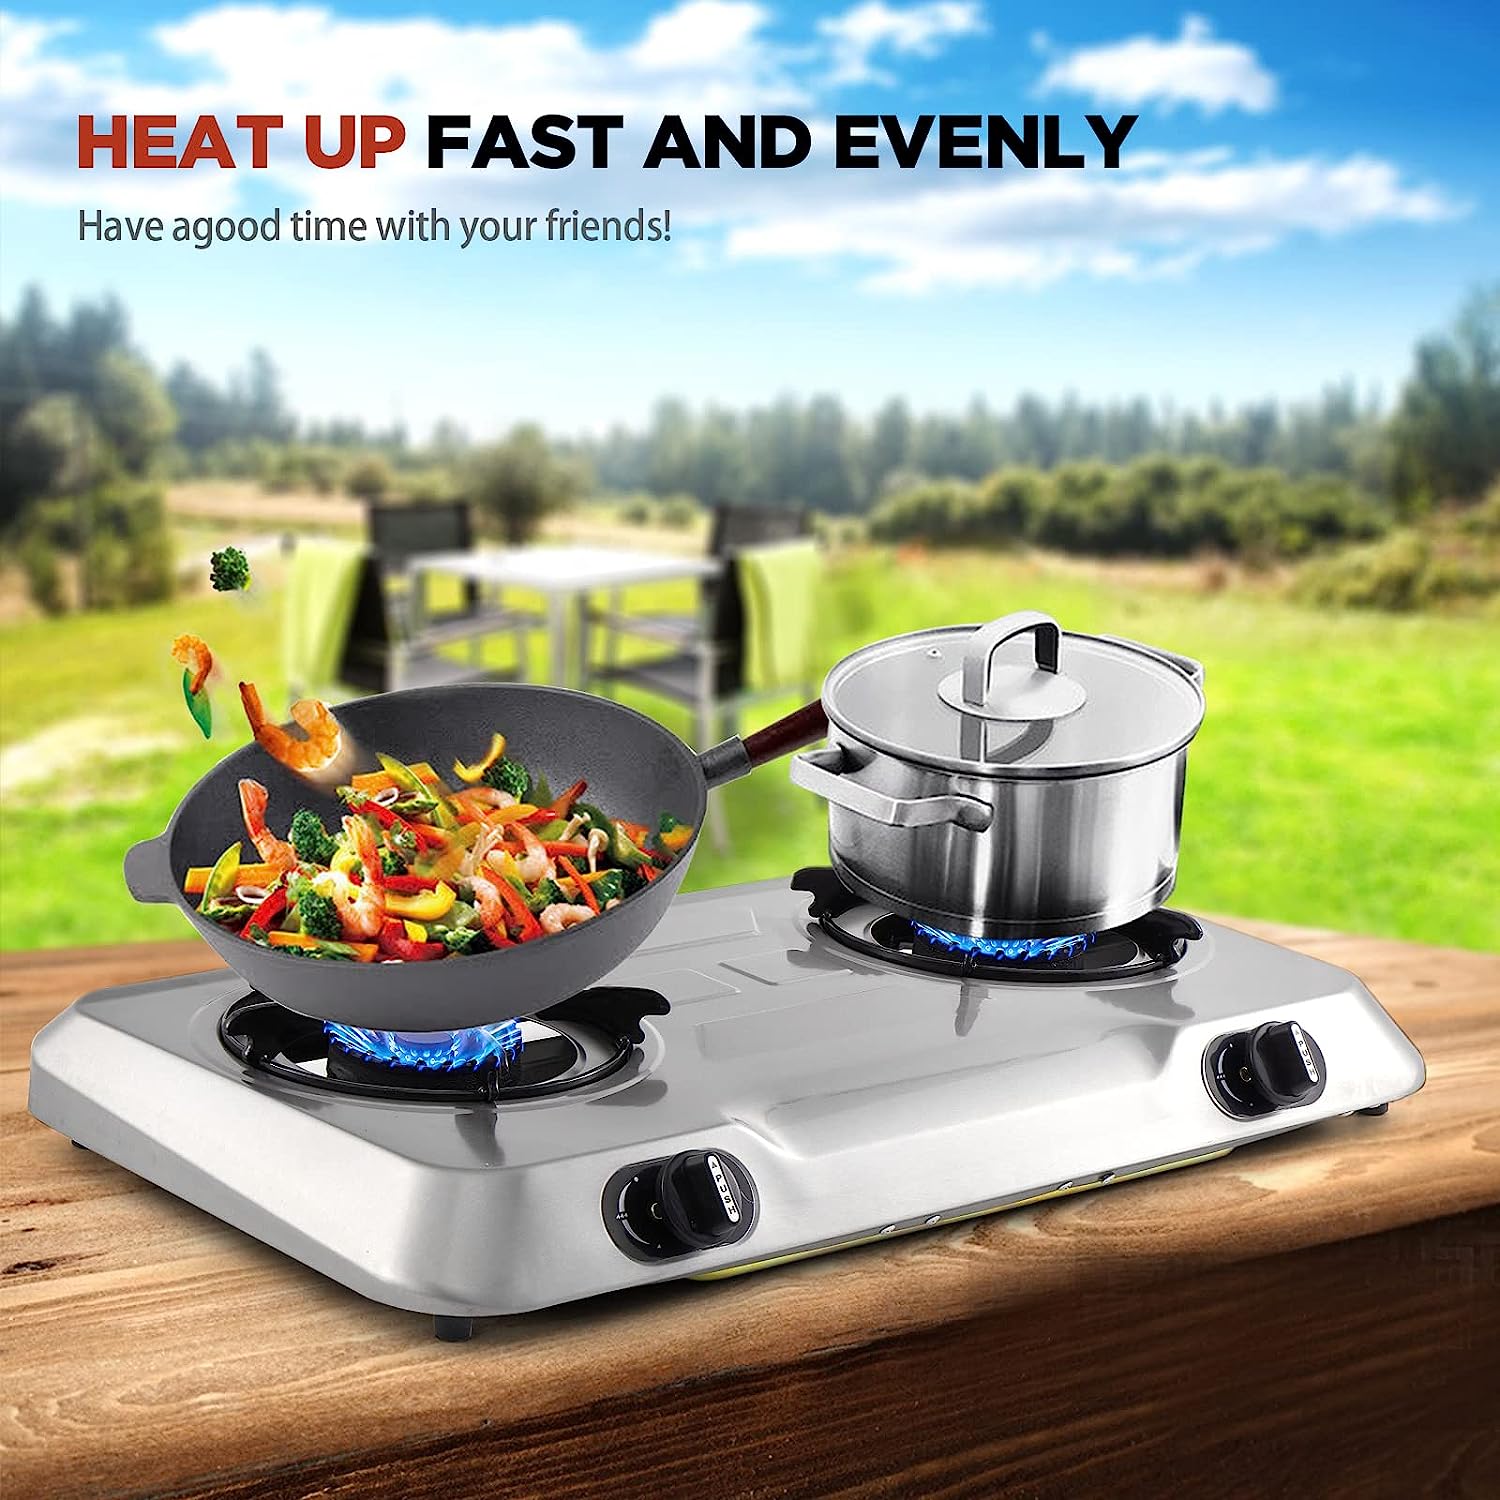 propane wok cooker burner portable fryer outdoor camping stir fry